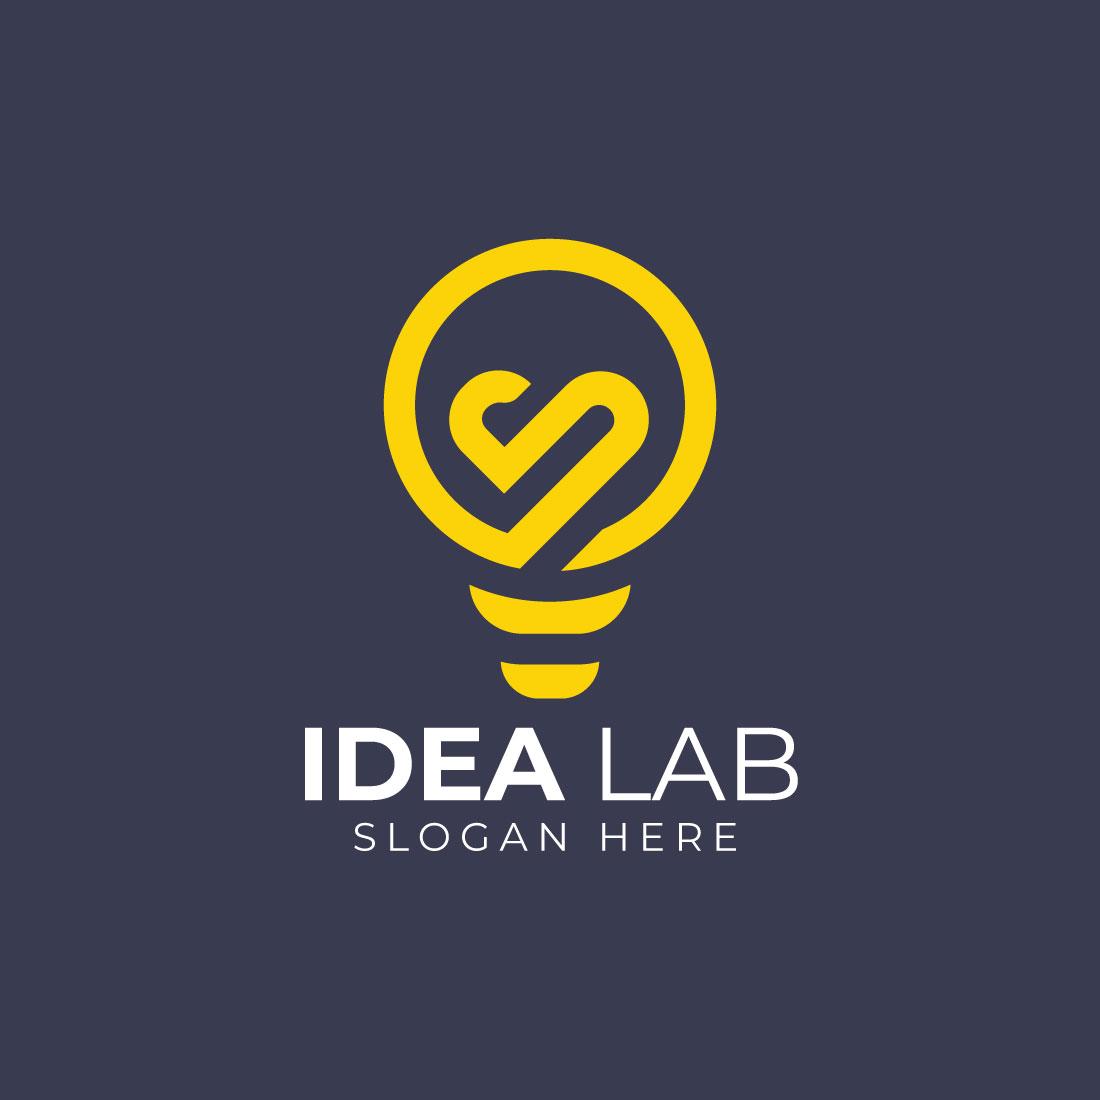 Idea Lab Icon Lamp with Heart Logo Design cover image.